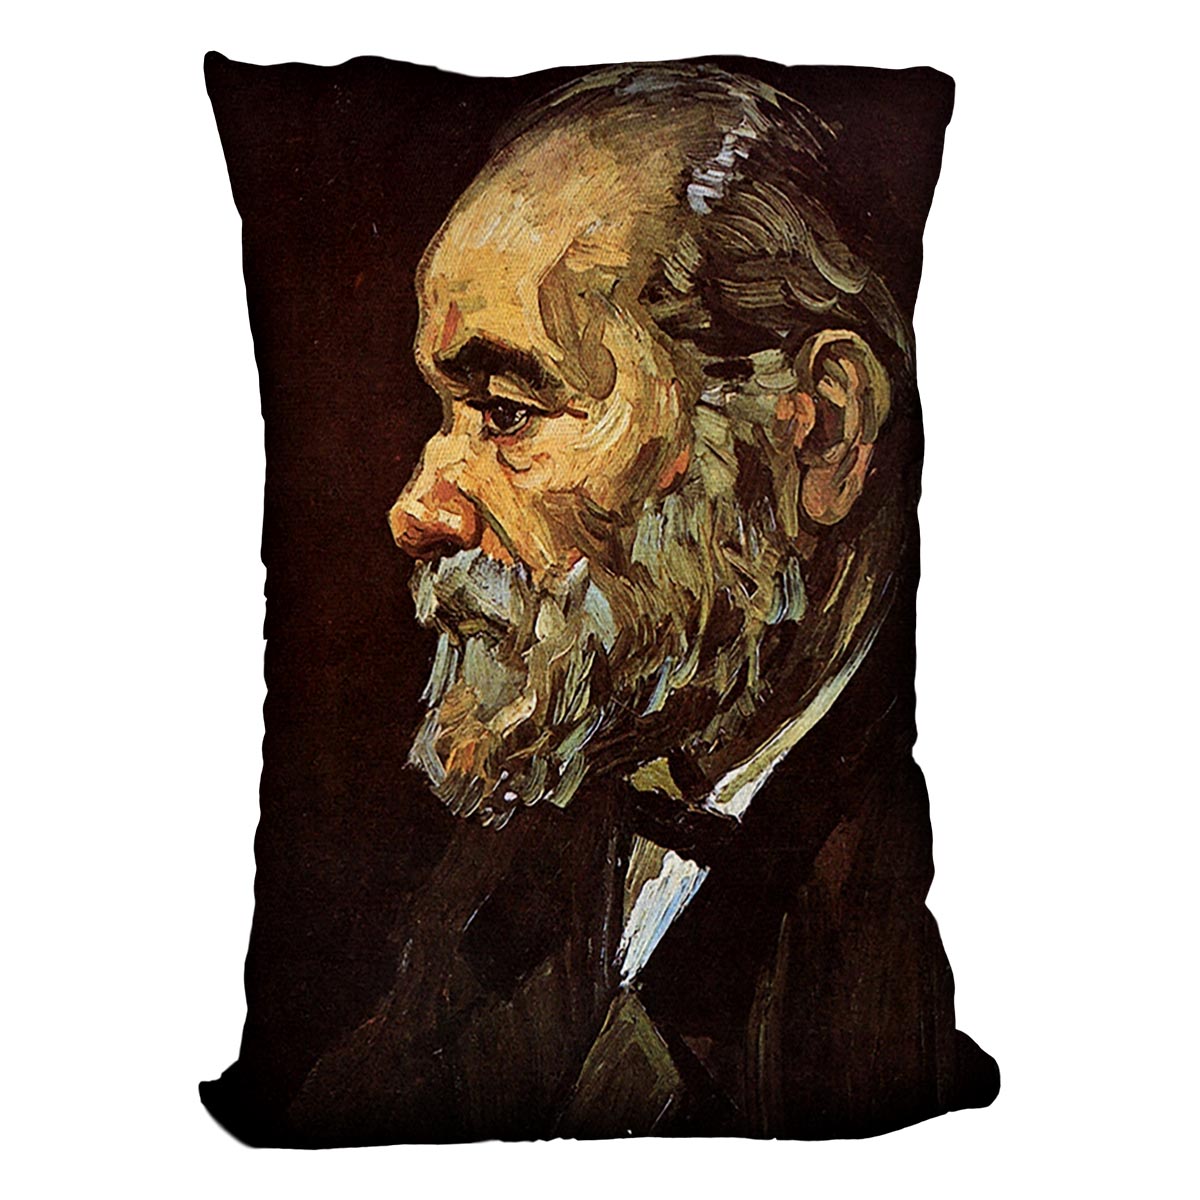 Portrait of an Old Man with Beard by Van Gogh Cushion